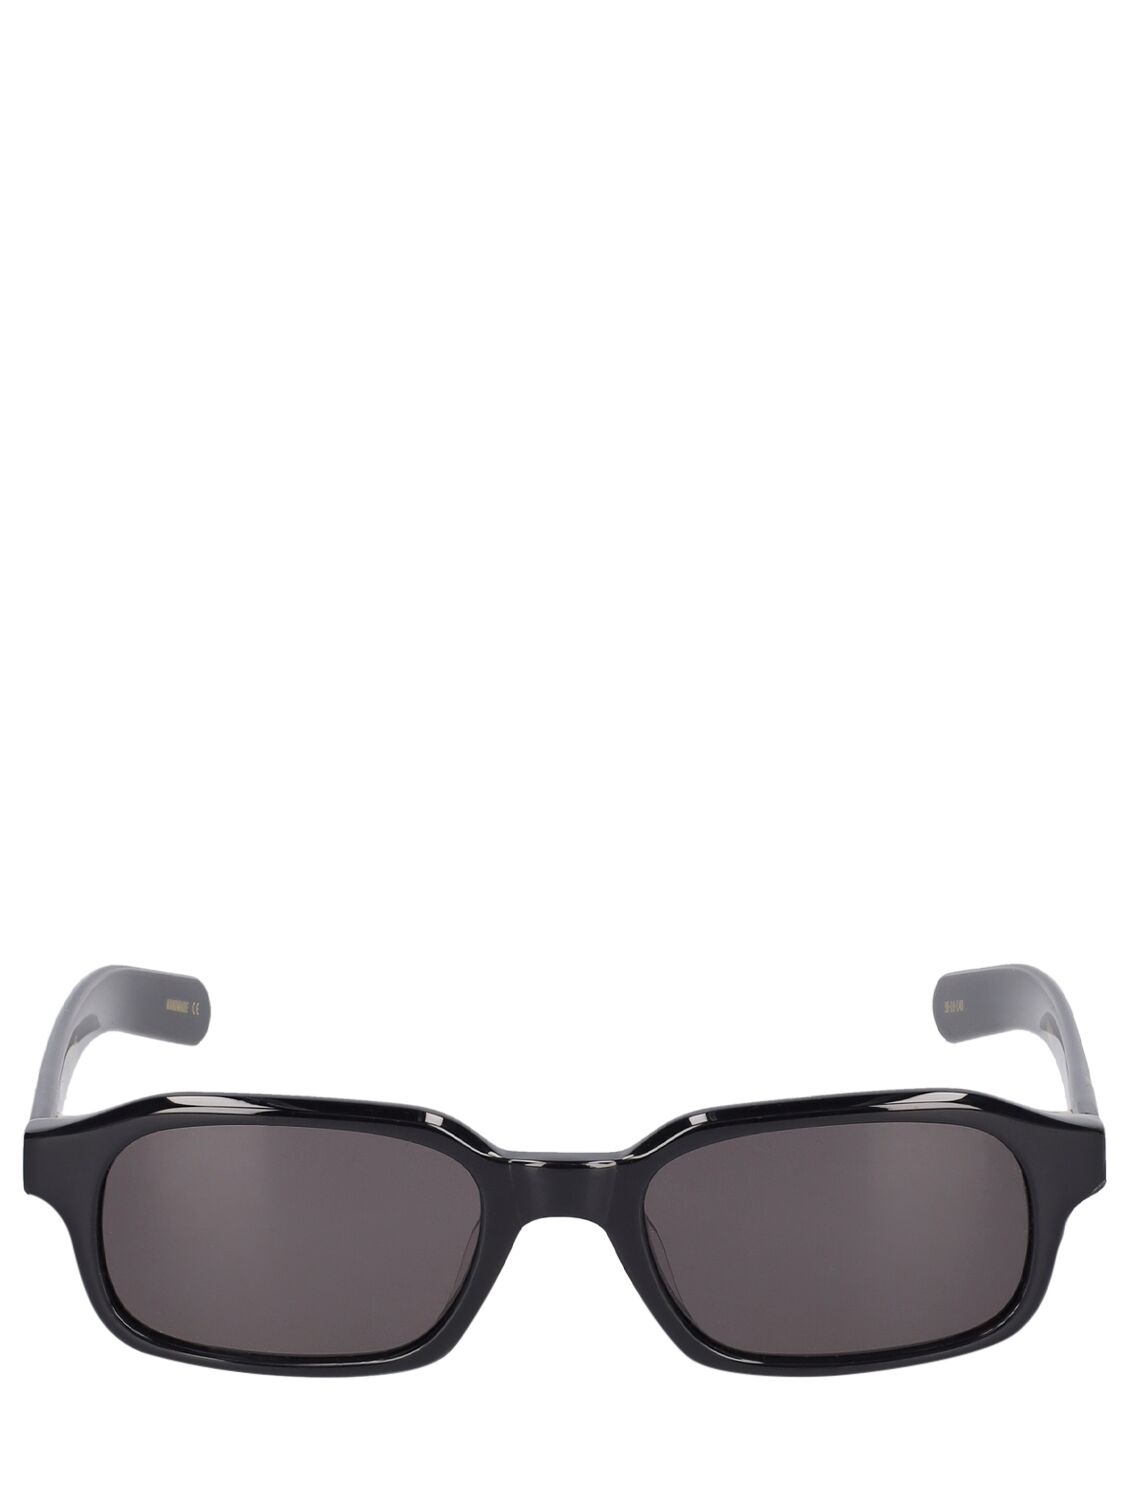 Image of Hanky Sunglasses